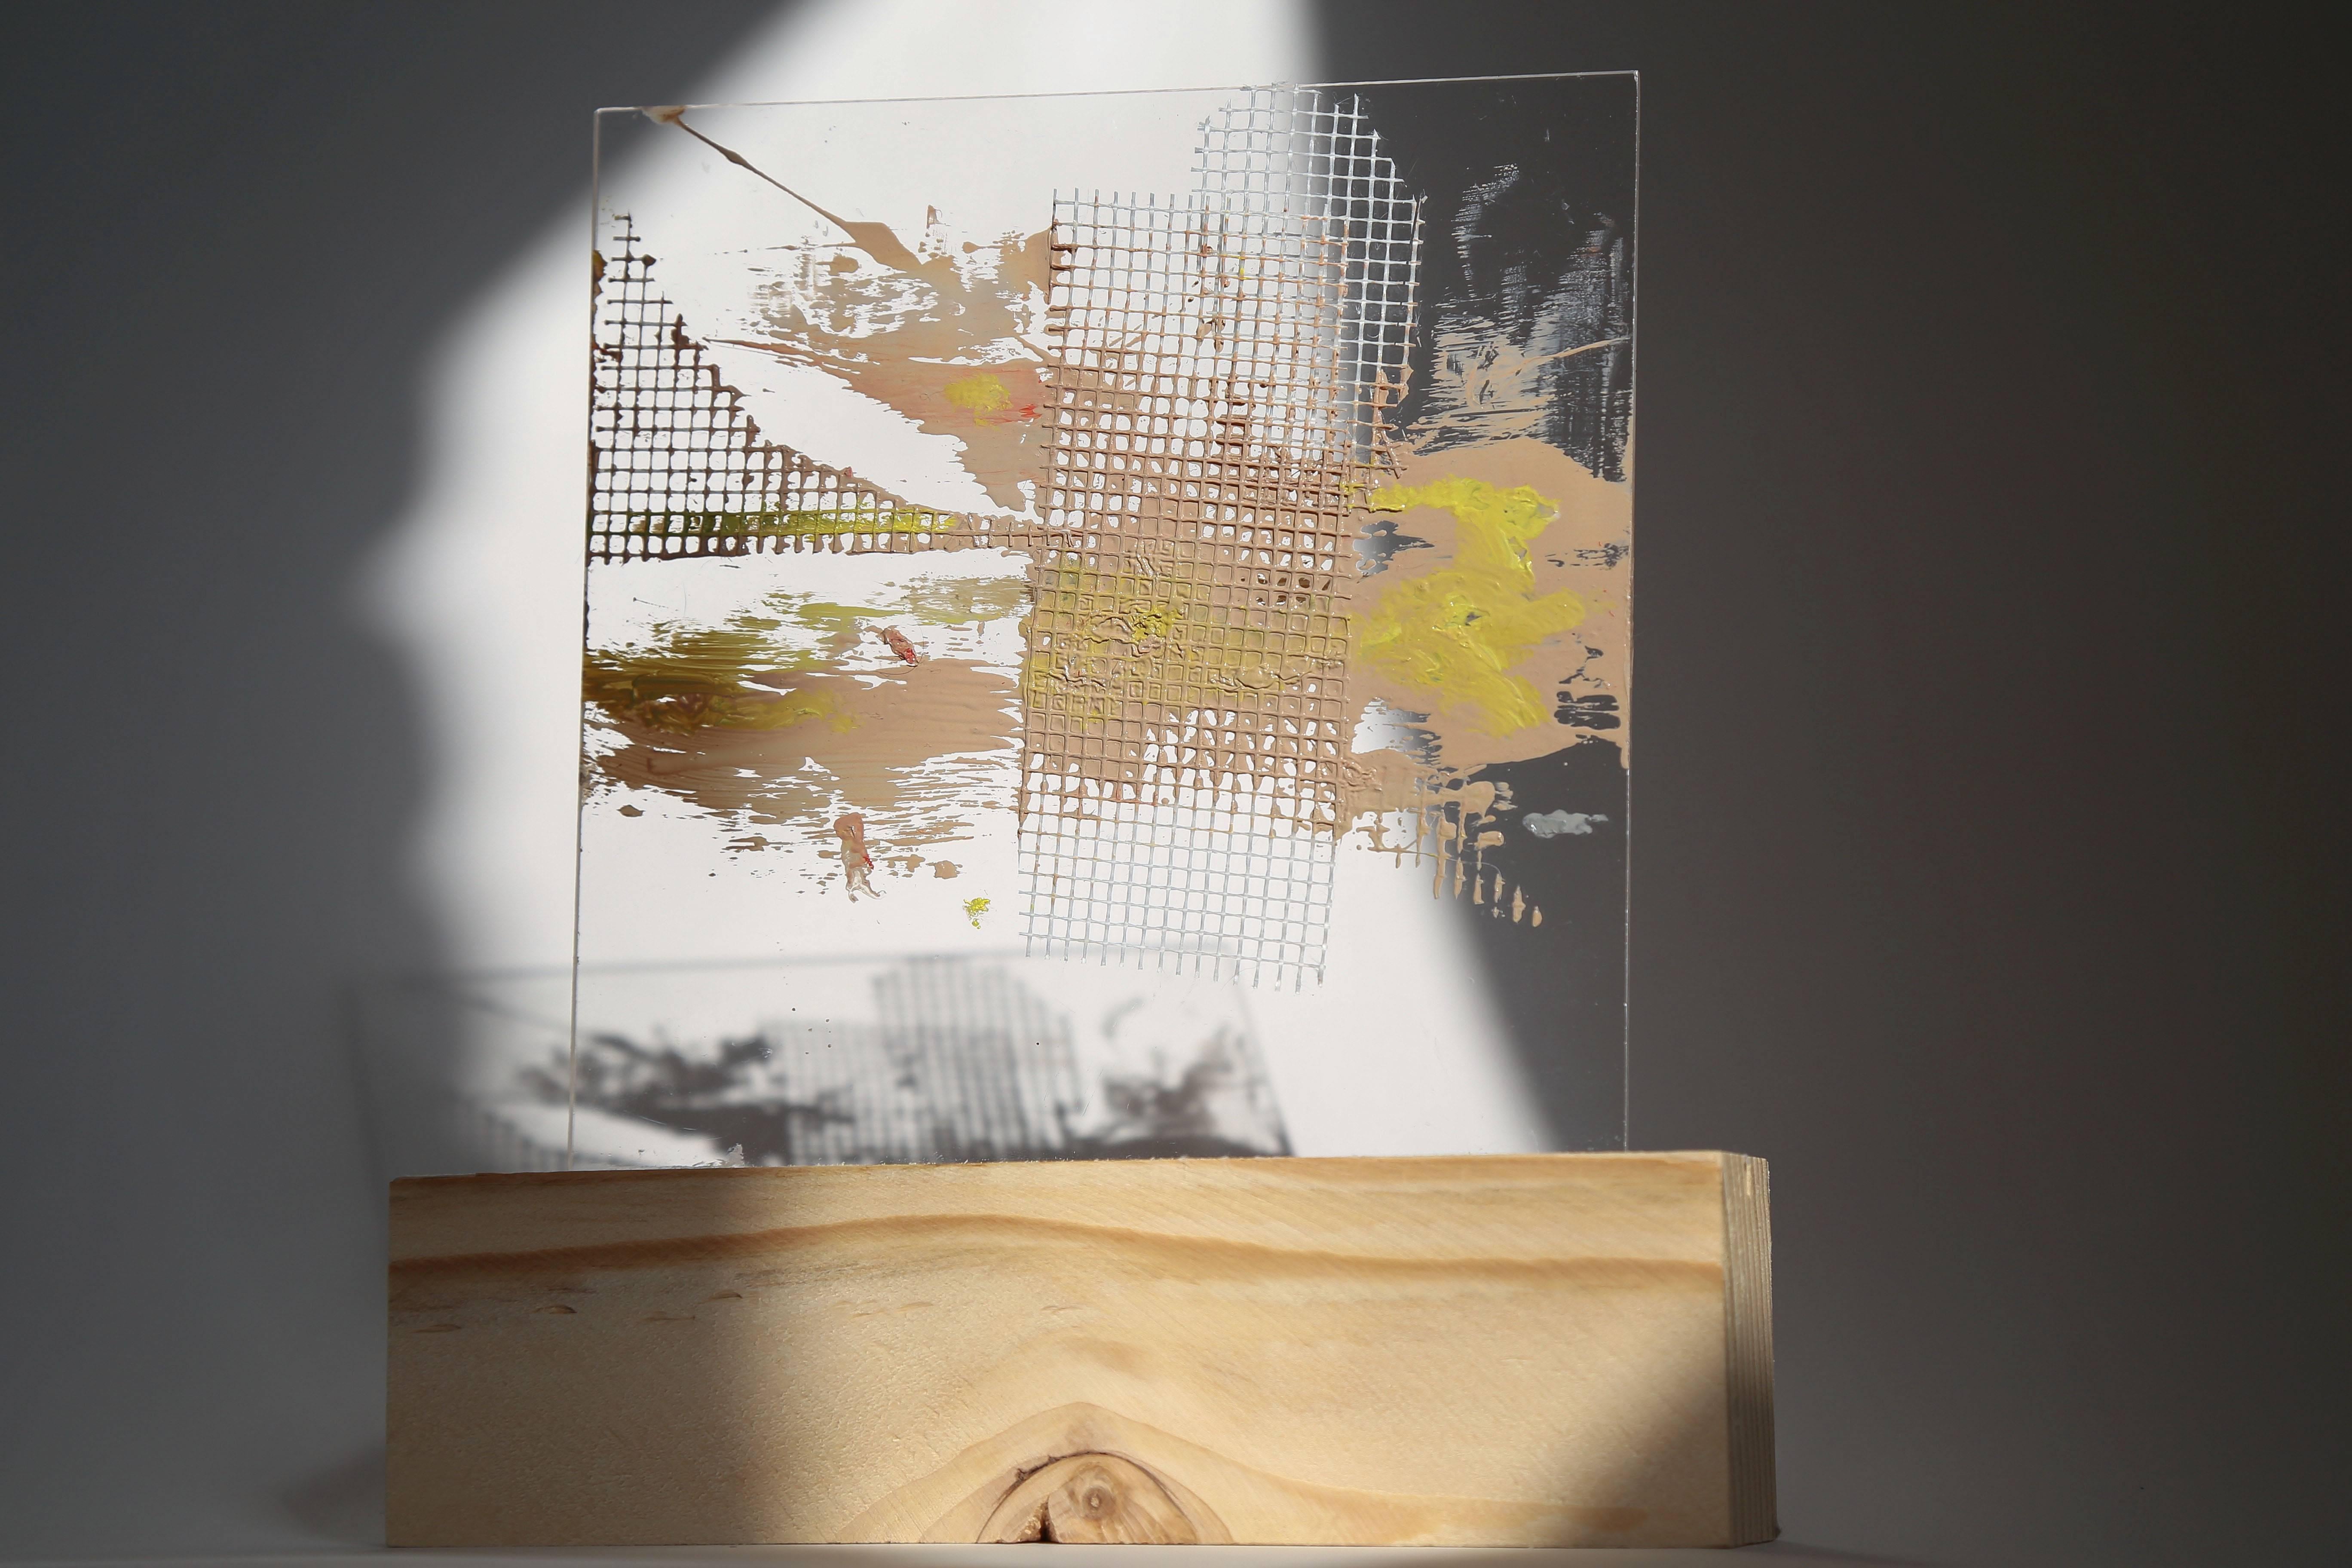 Lourdes Rivera, Retrospect 11, 2015, Fabric, Plexiglass, Wood, Oil Paint